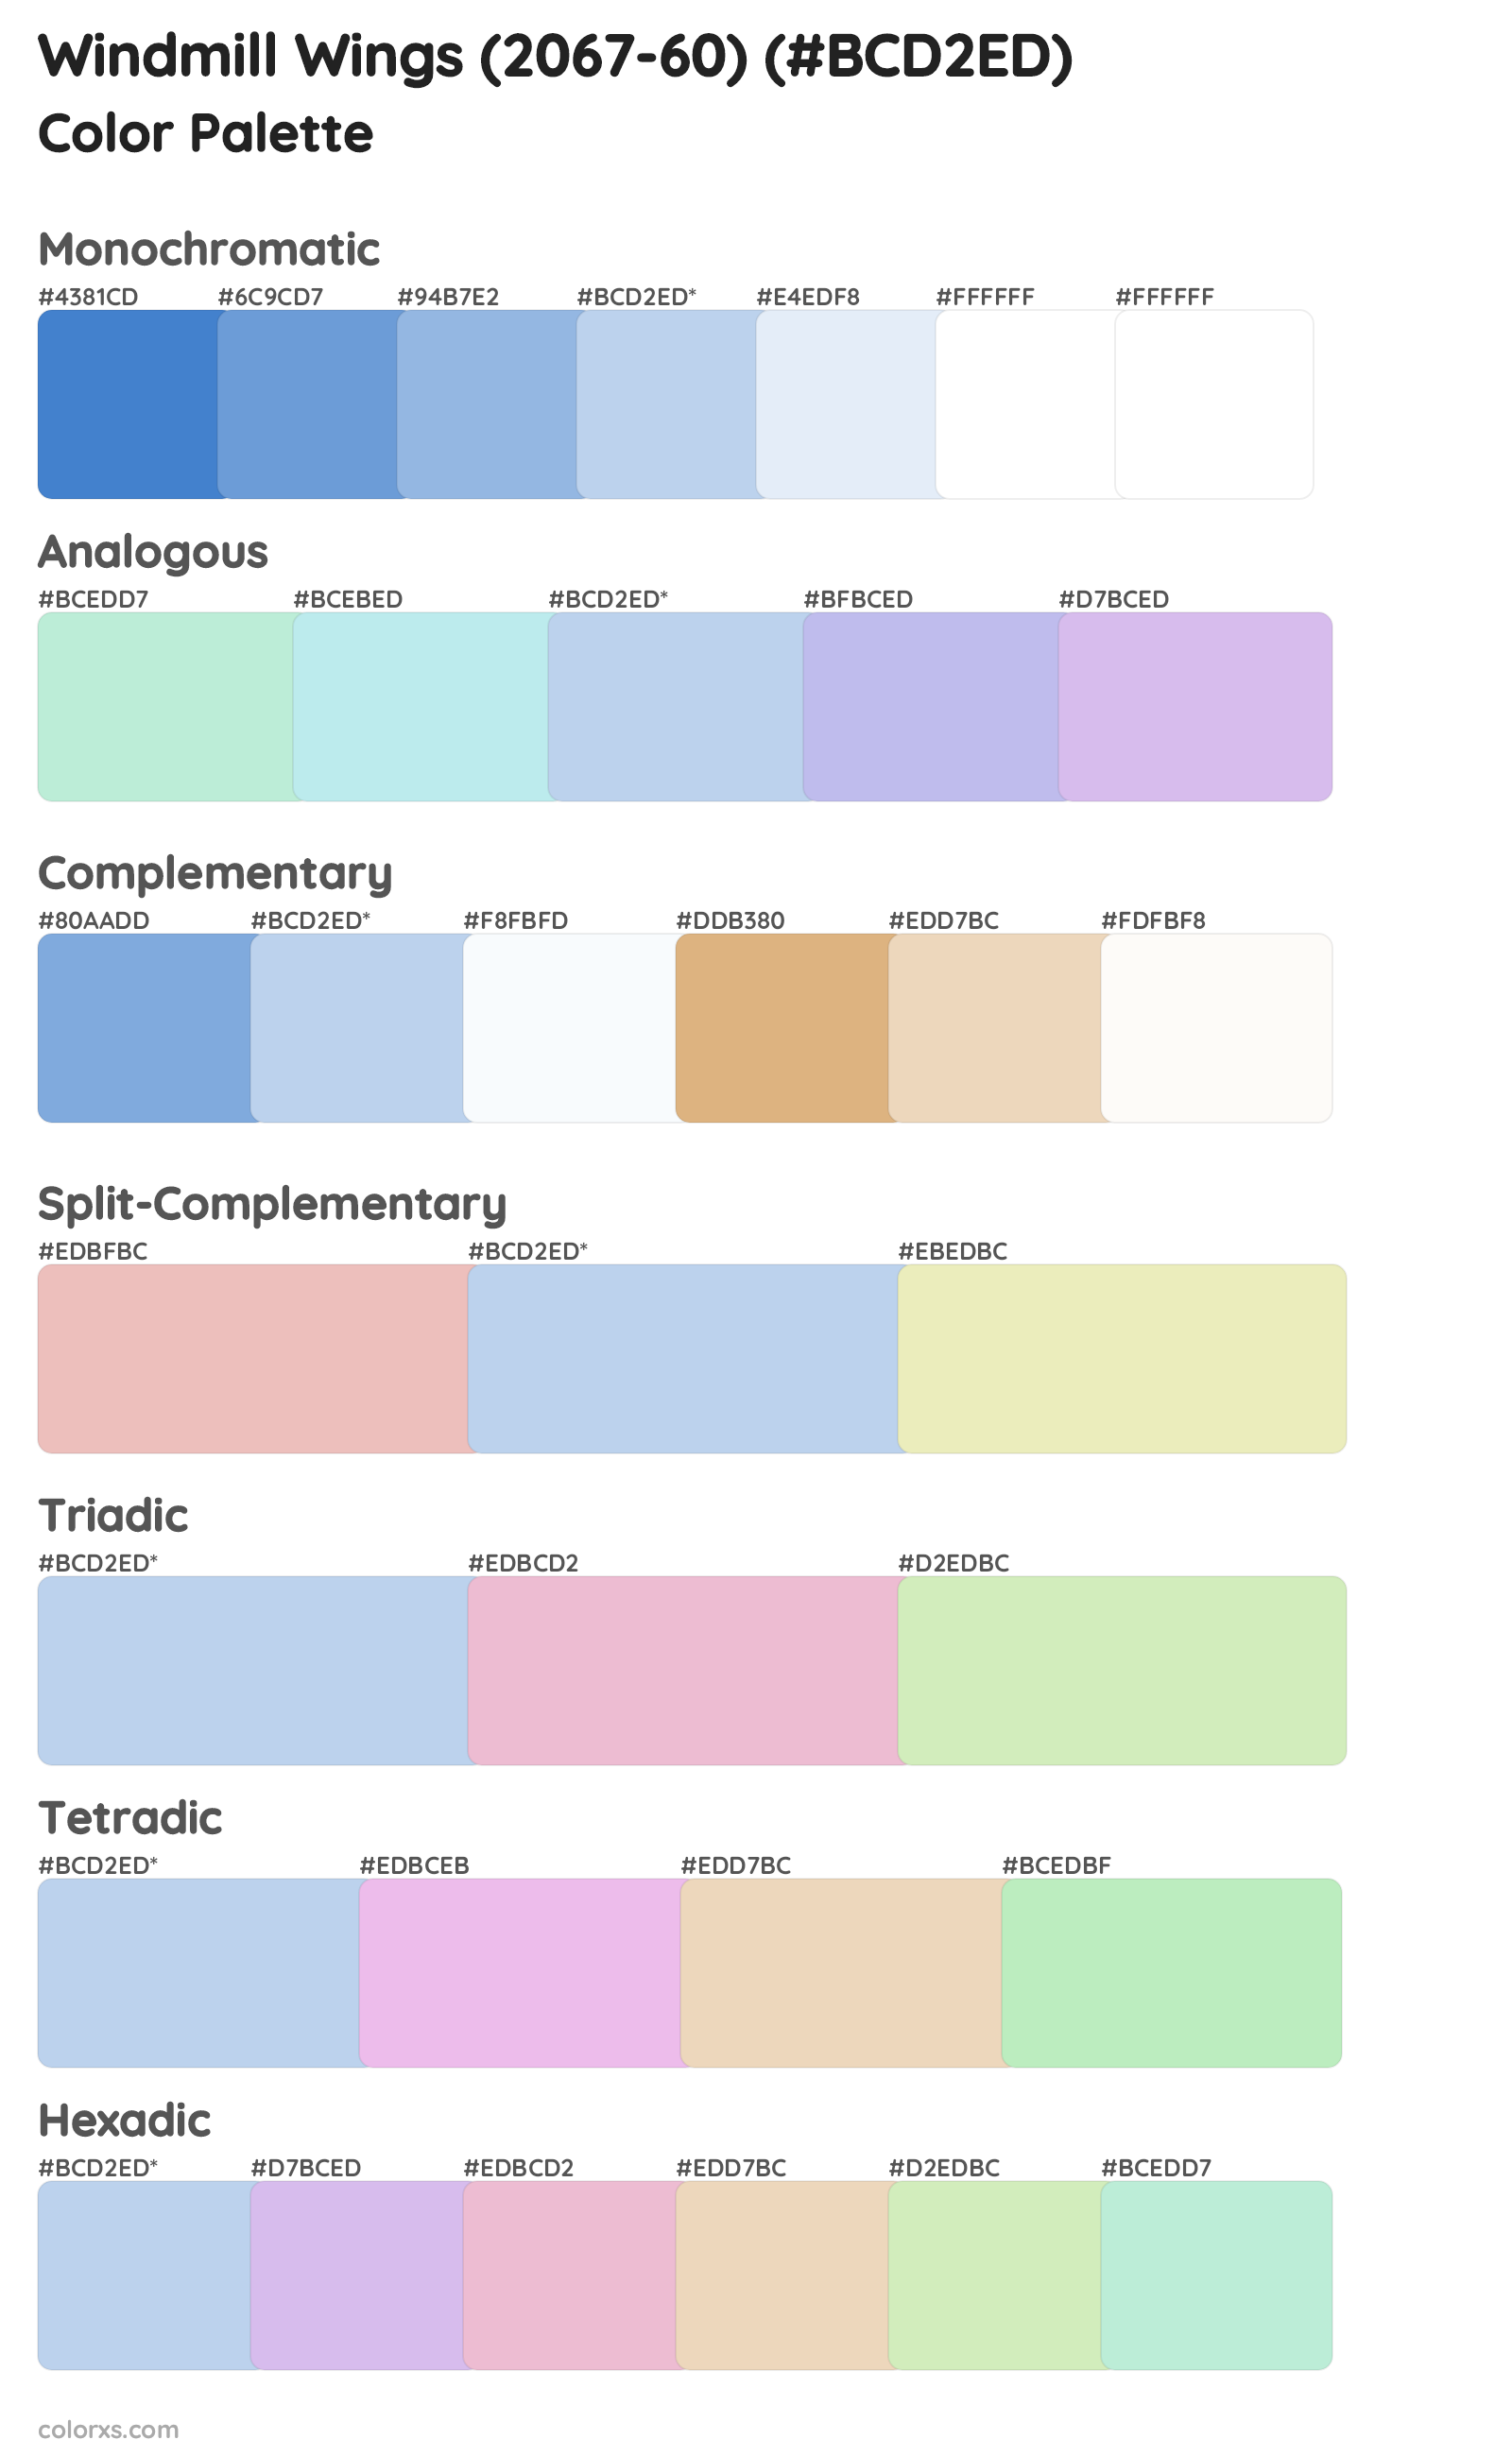 Windmill Wings (2067-60) Color Scheme Palettes